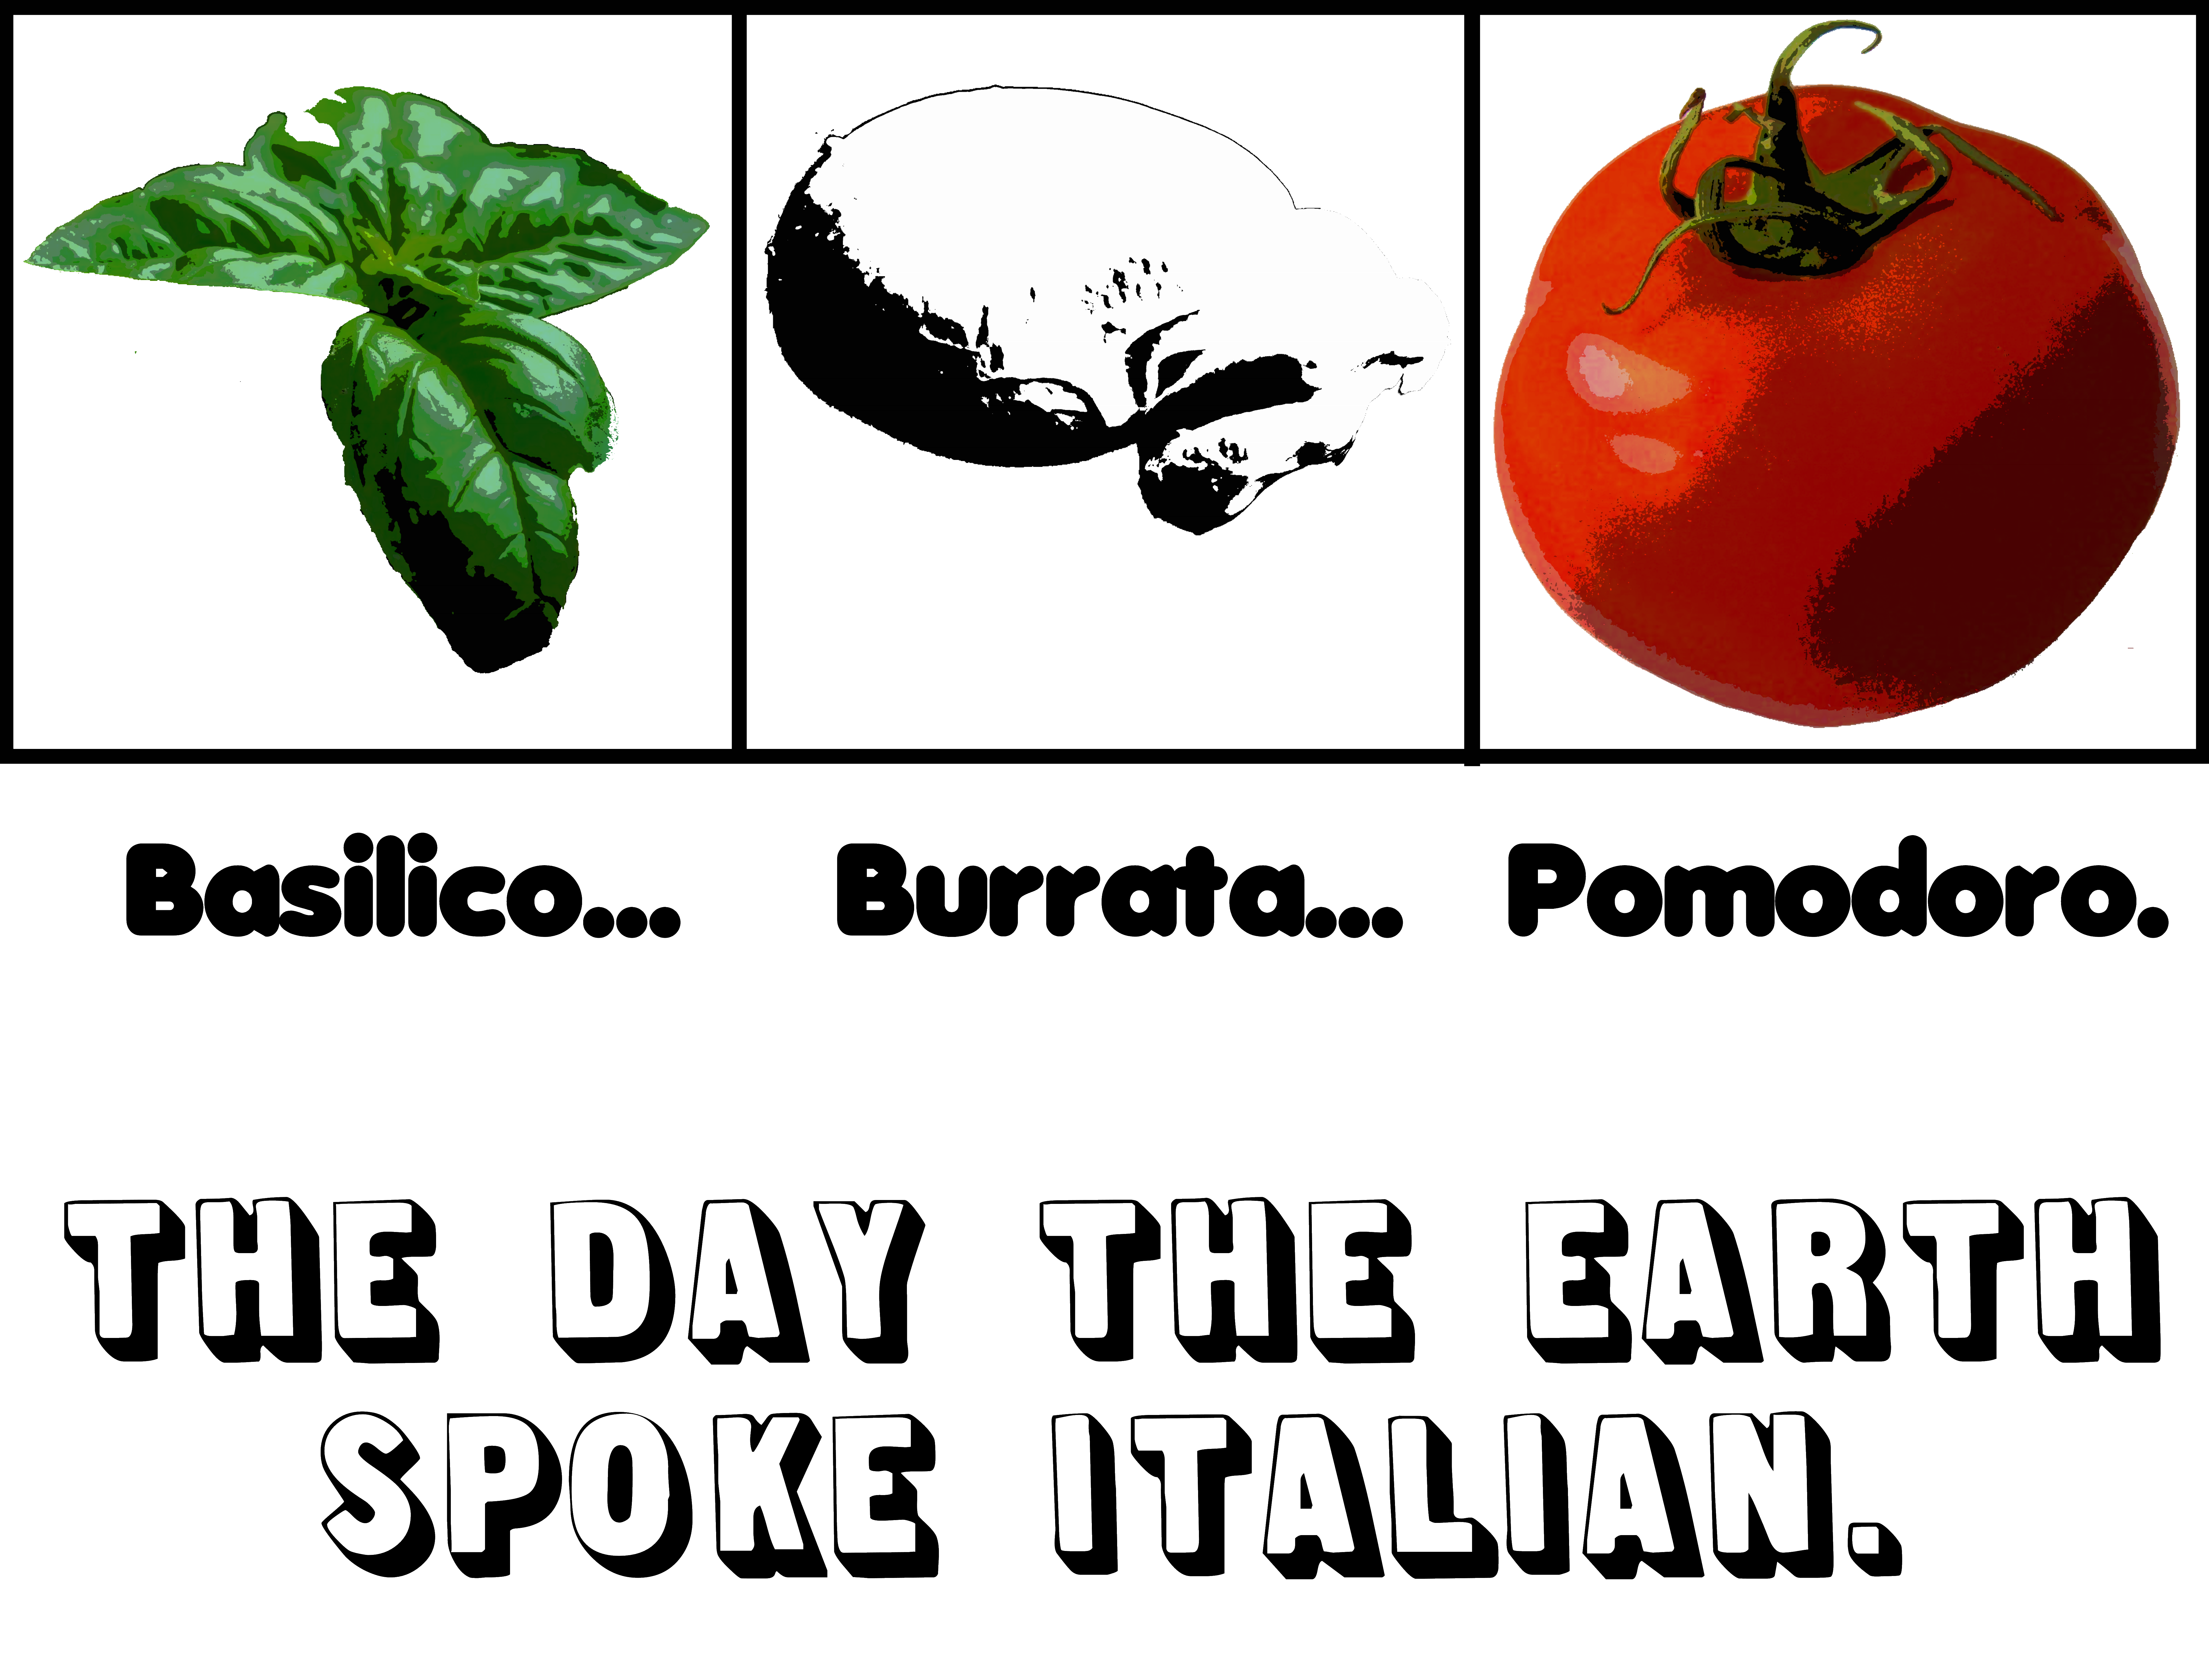 The Day the Earth Spoke Italian.